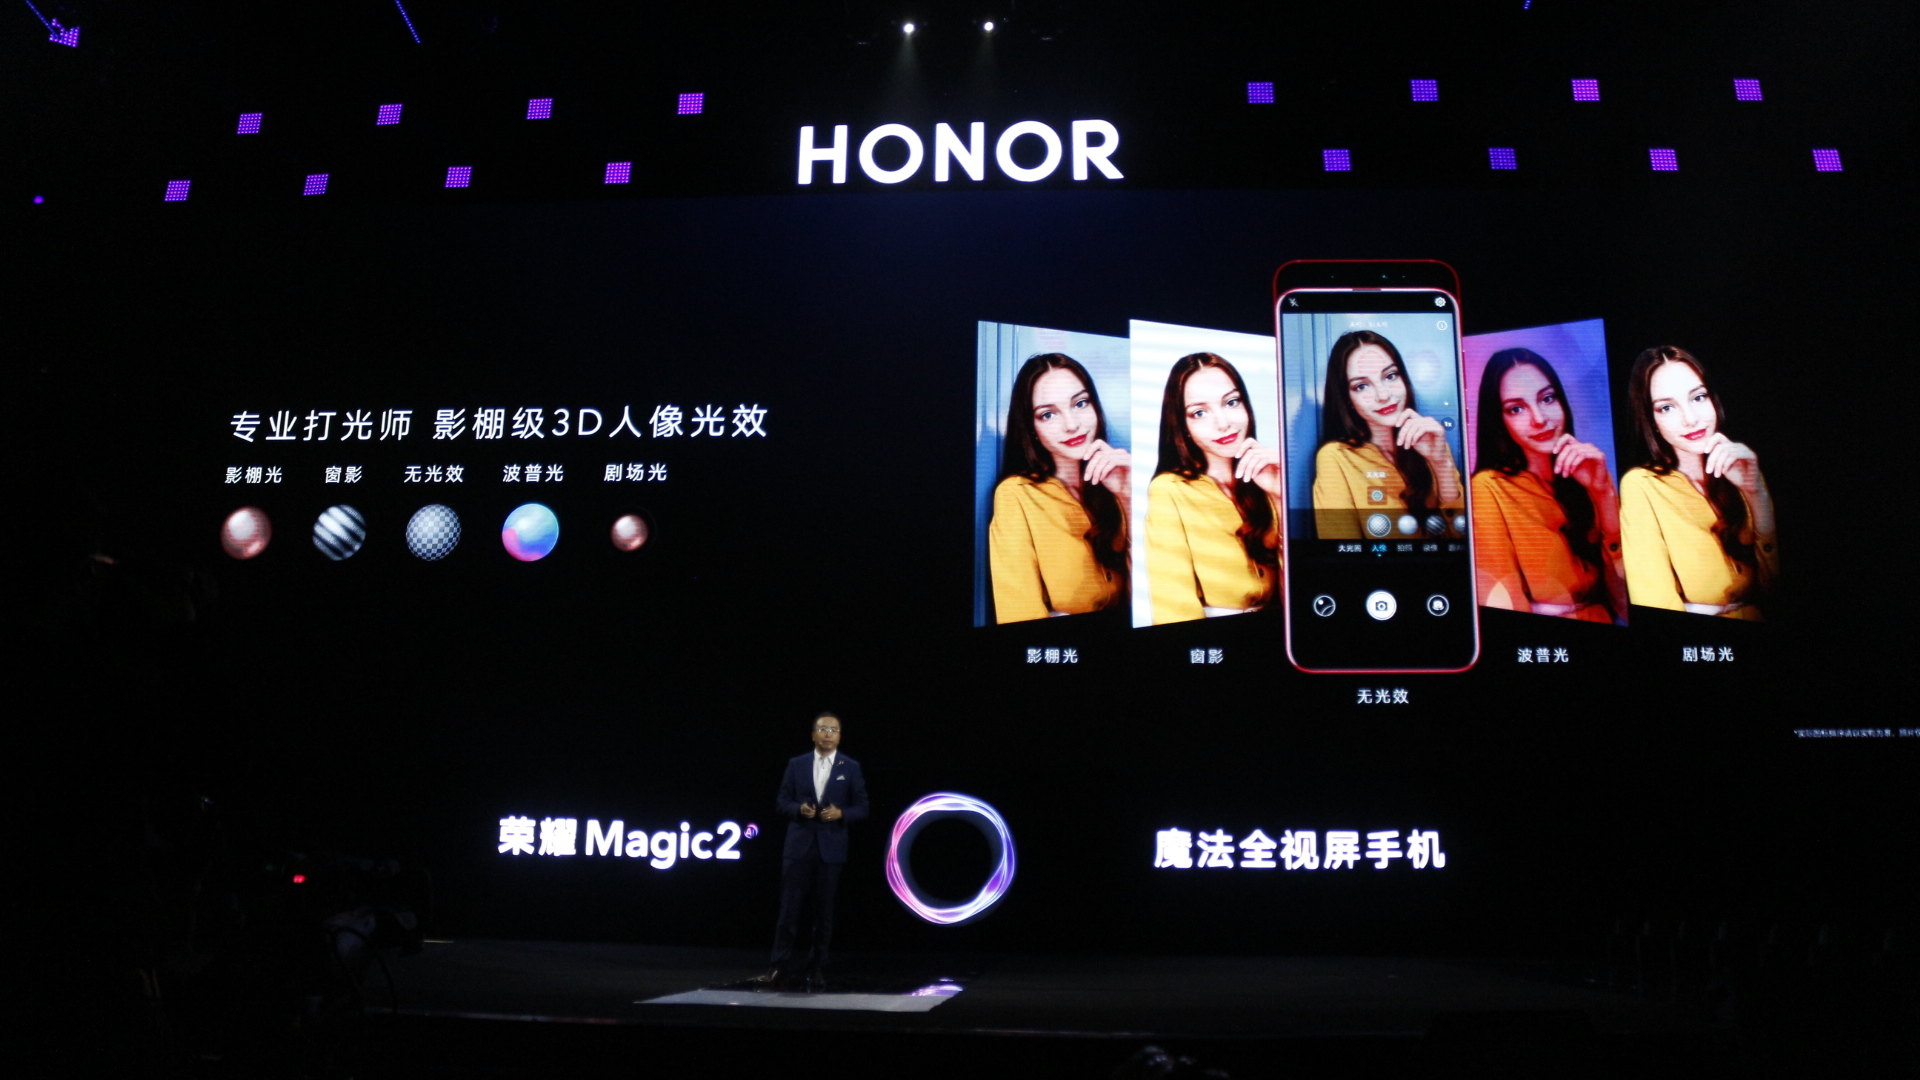 honor magic 2 launch event